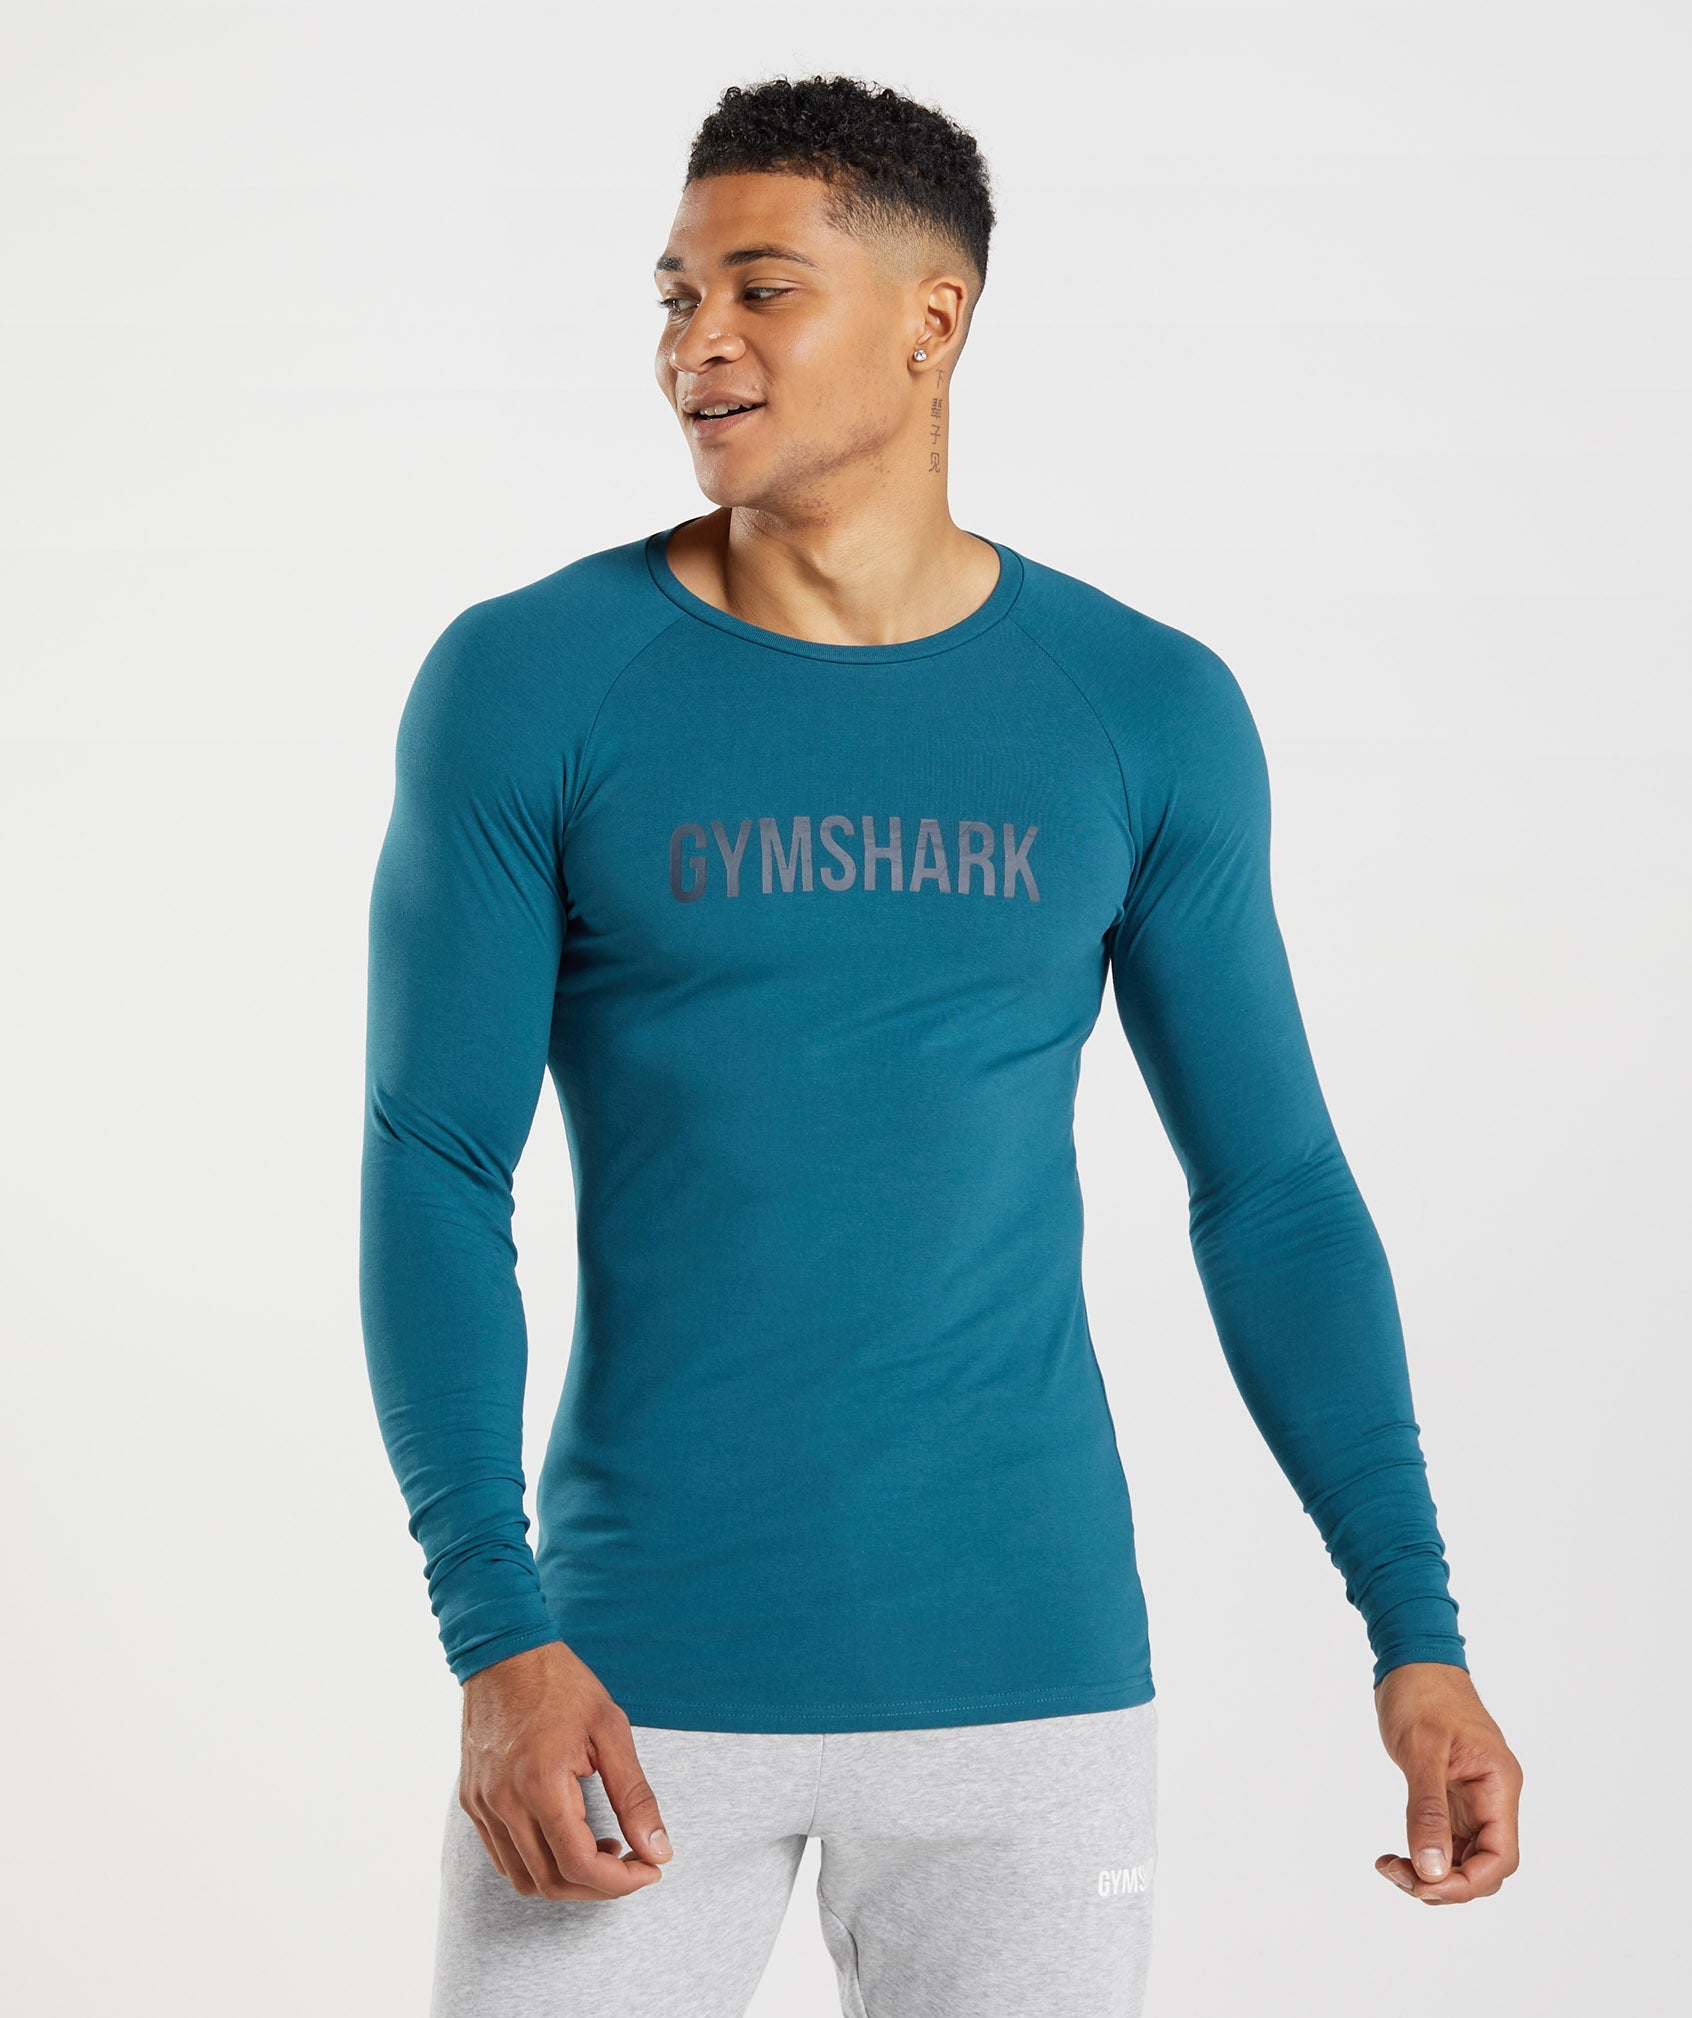 Gymshark Apollo Long Sleeve T-Shirt - Atlantic Blue